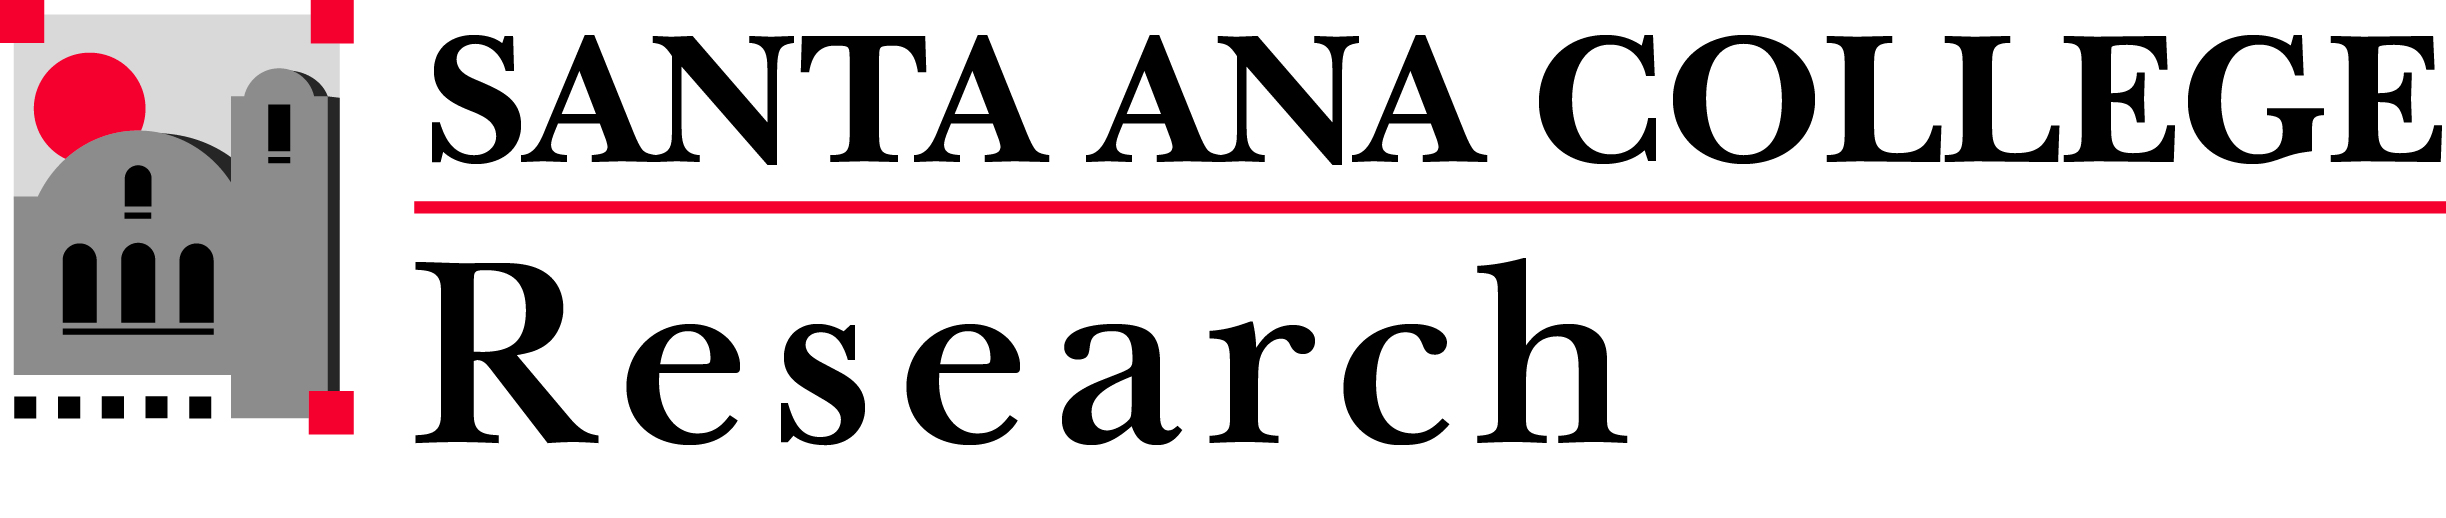 Santa Ana College Research